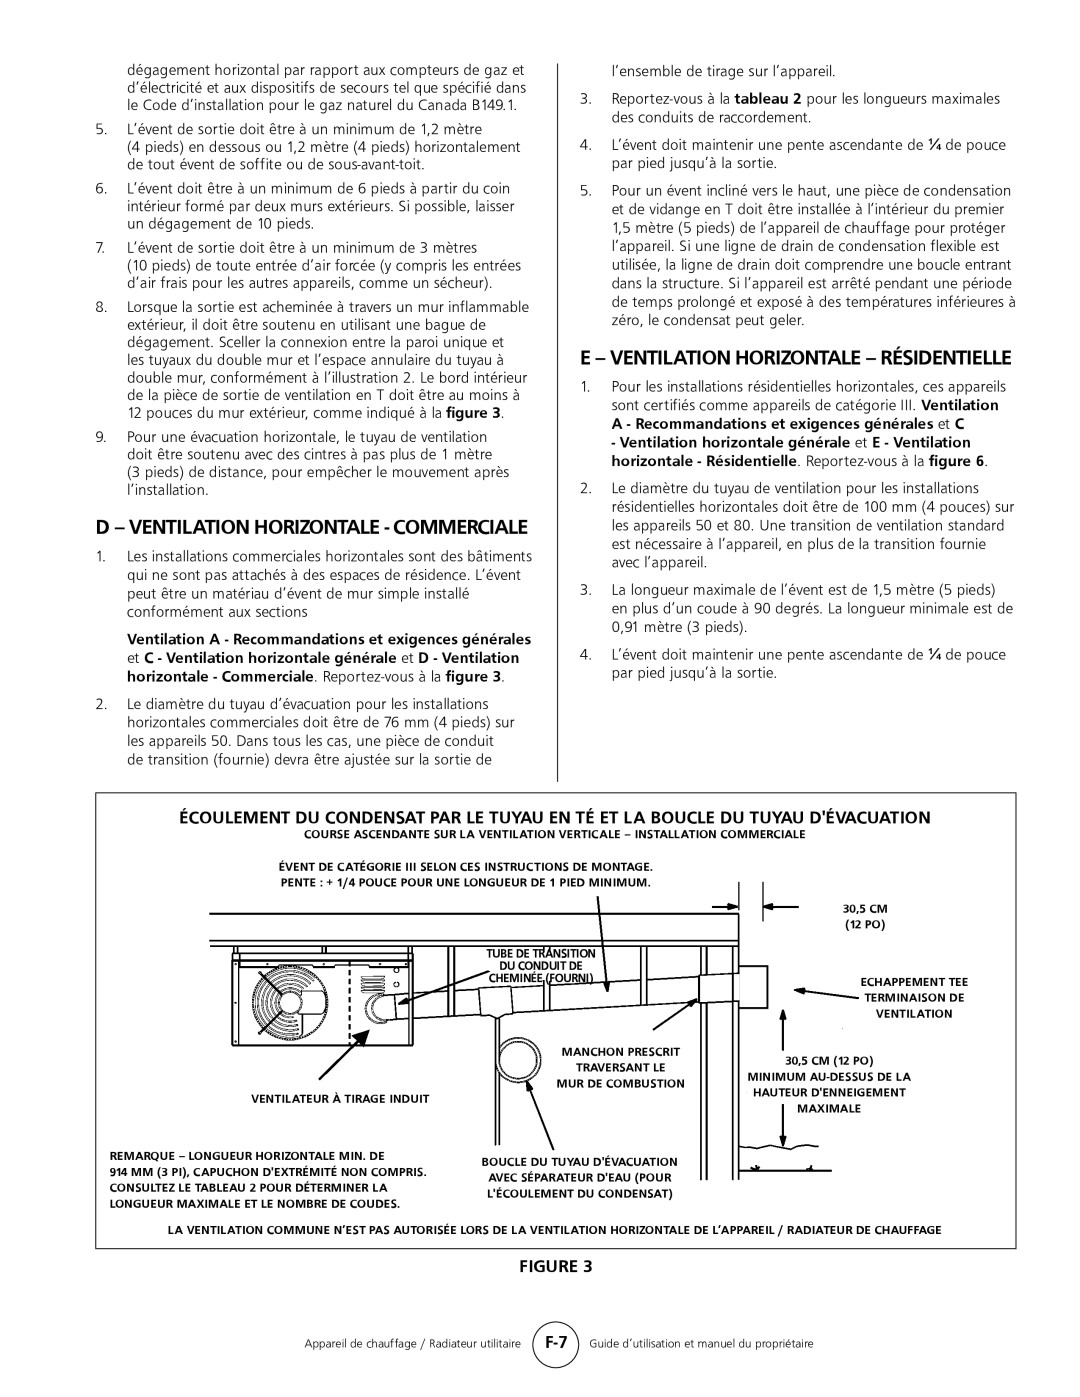 Mr. Heater MHU 80, MHU 50 D - Ventilation Horizontale - Commerciale, E - Ventilation Horizontale - Résidentielle 